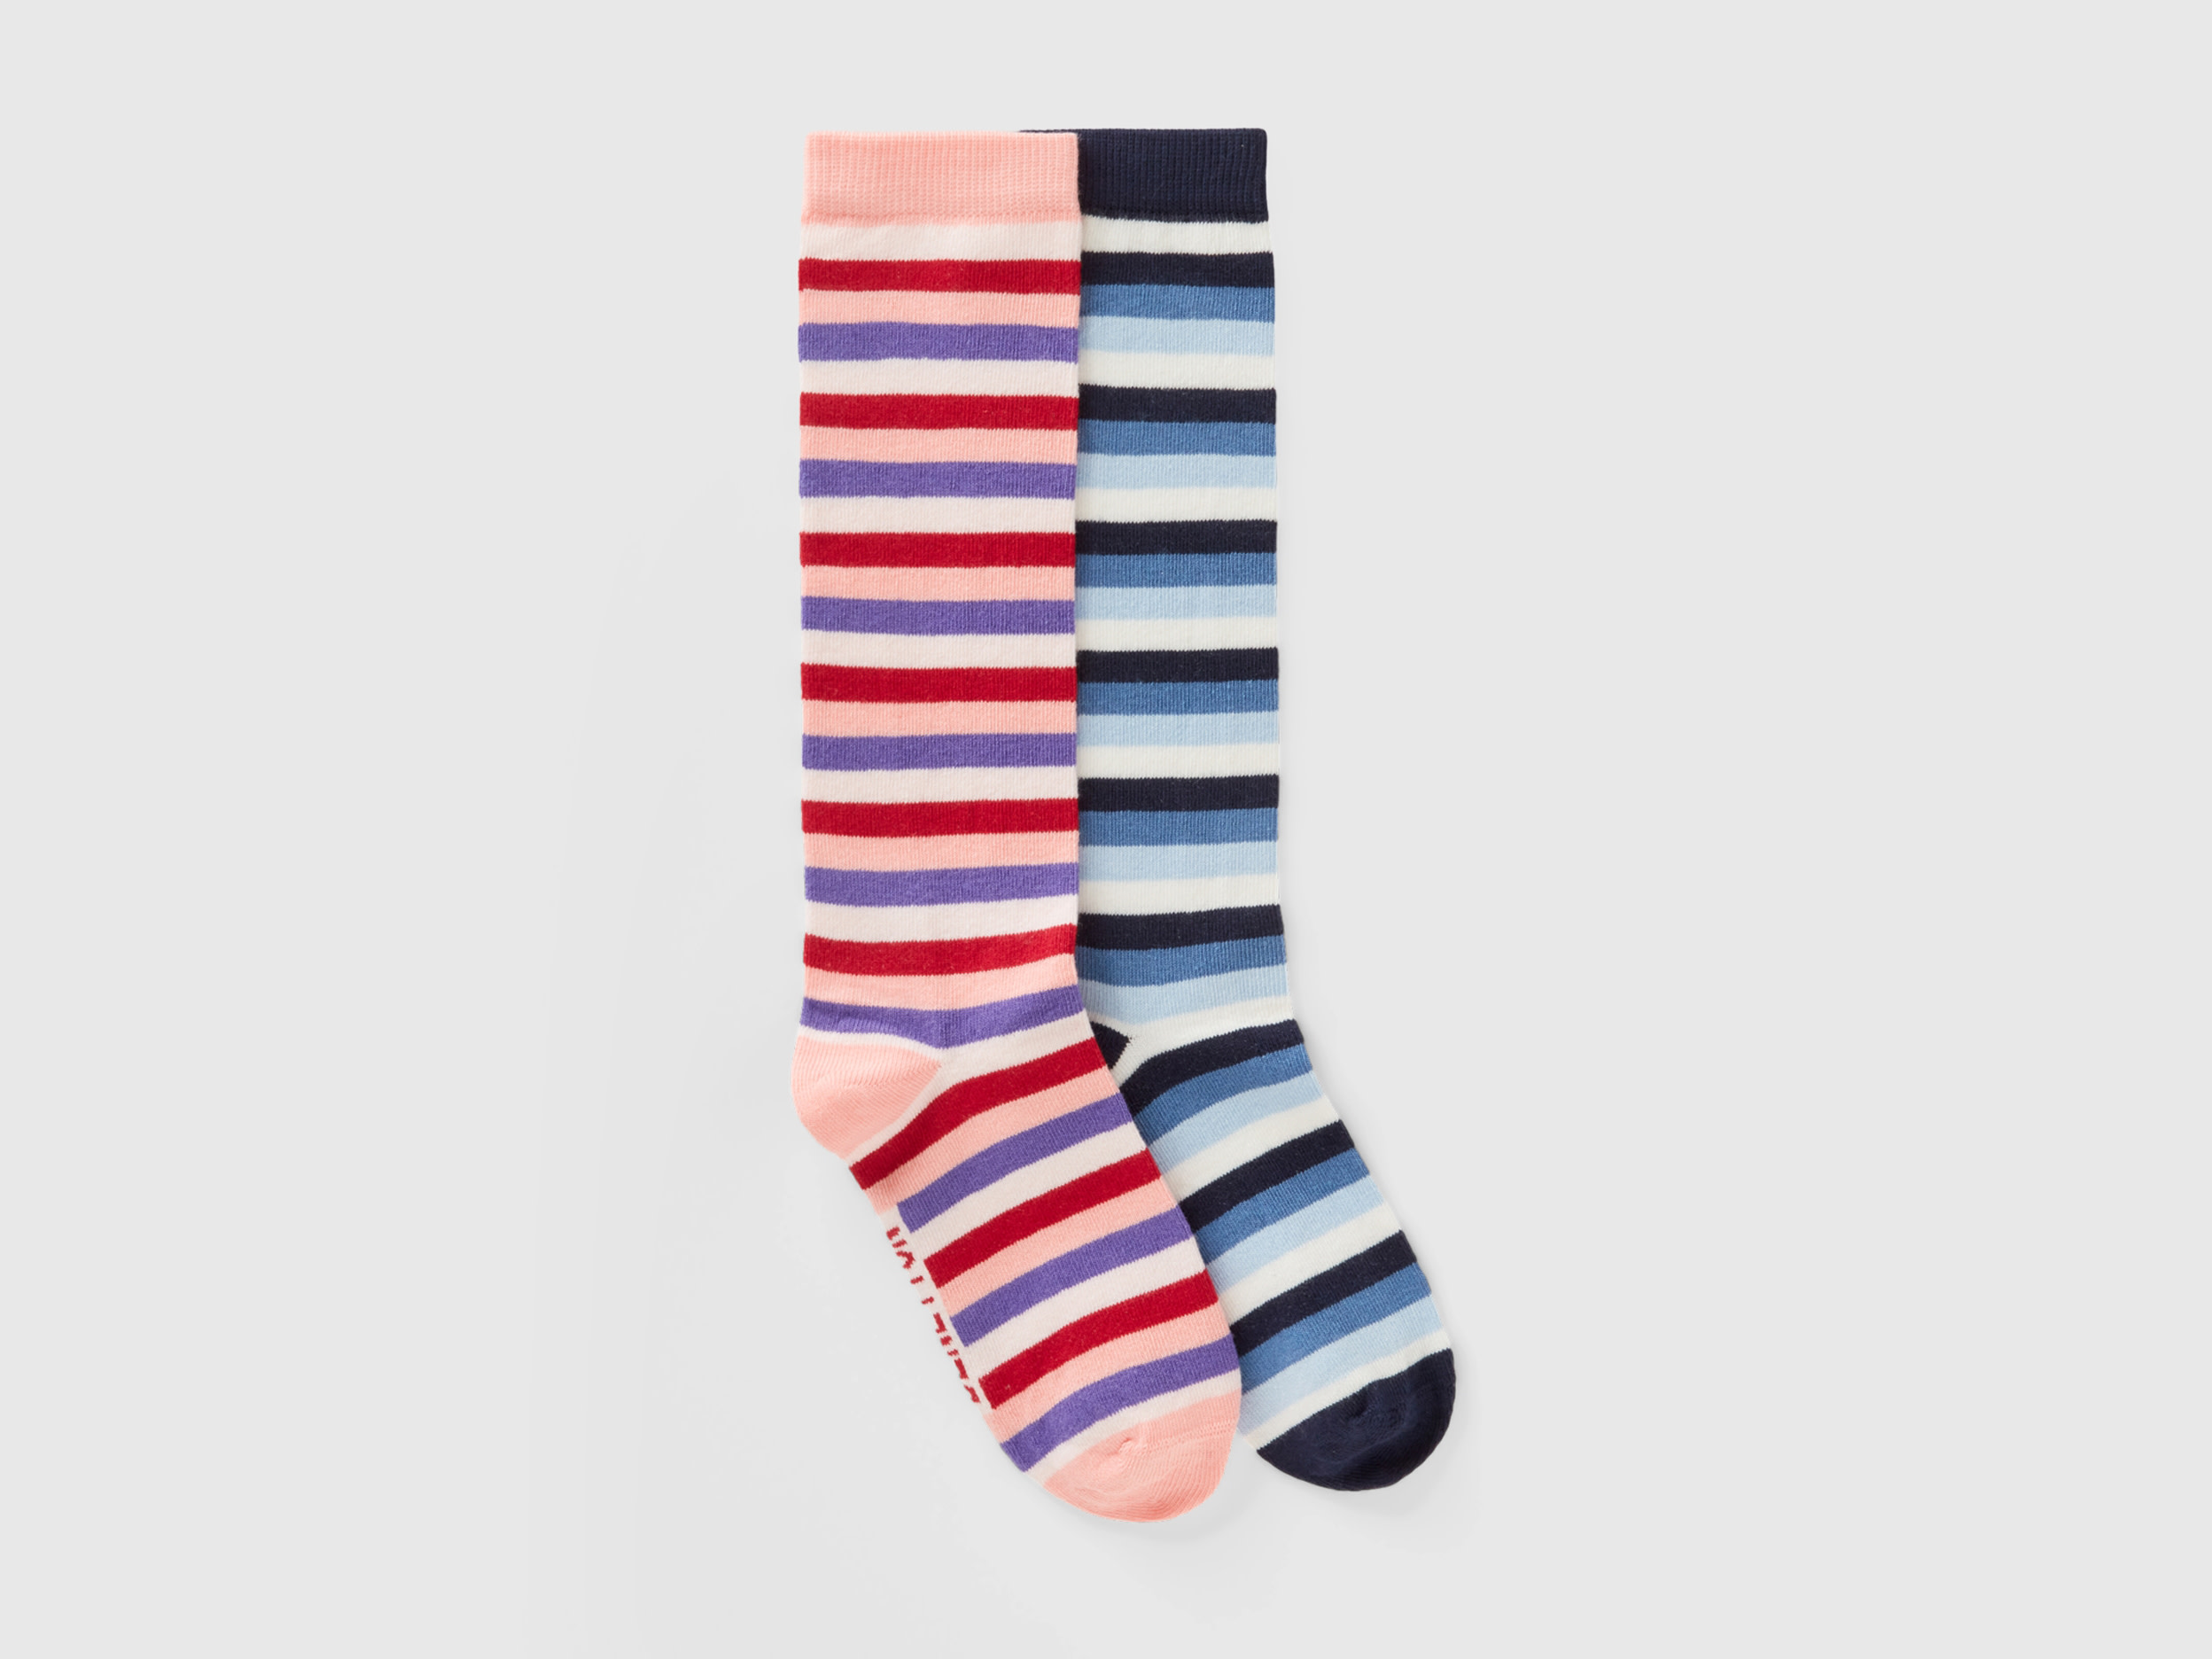 Benetton, Due Sets Of Striped Jacquard Socks, size 11-12, Multi-color, Kids